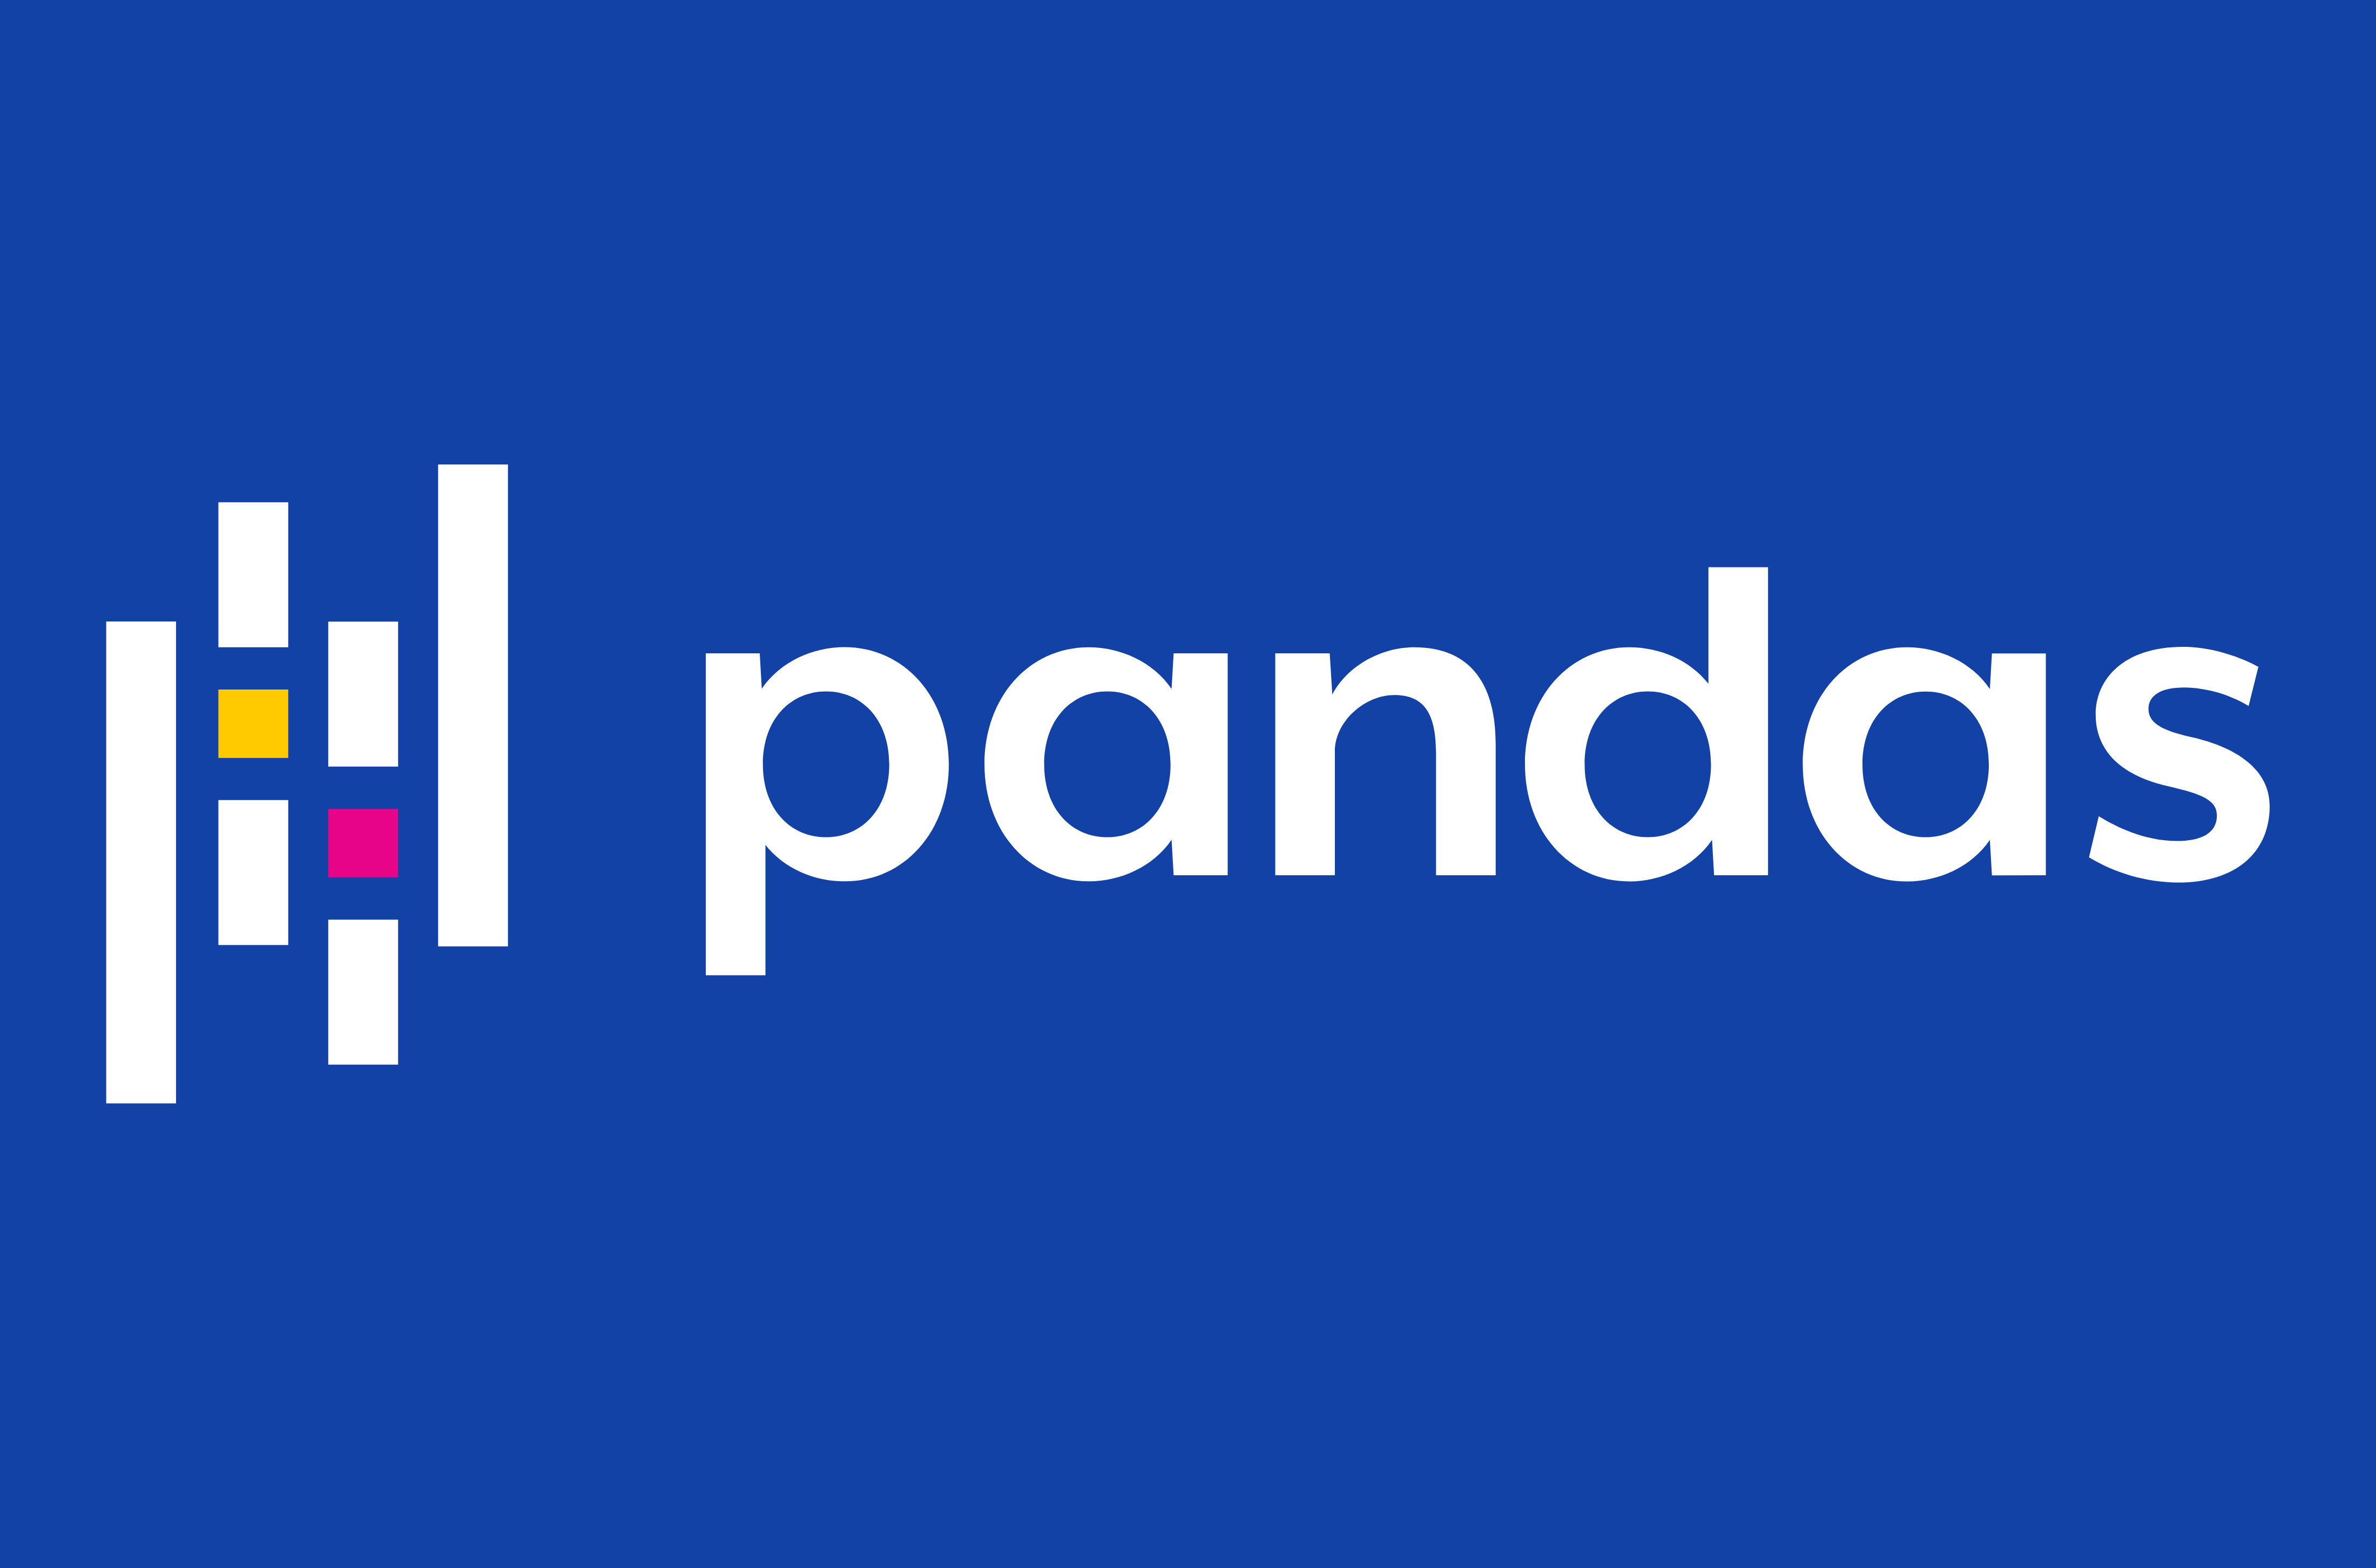 Introduction to Pandas